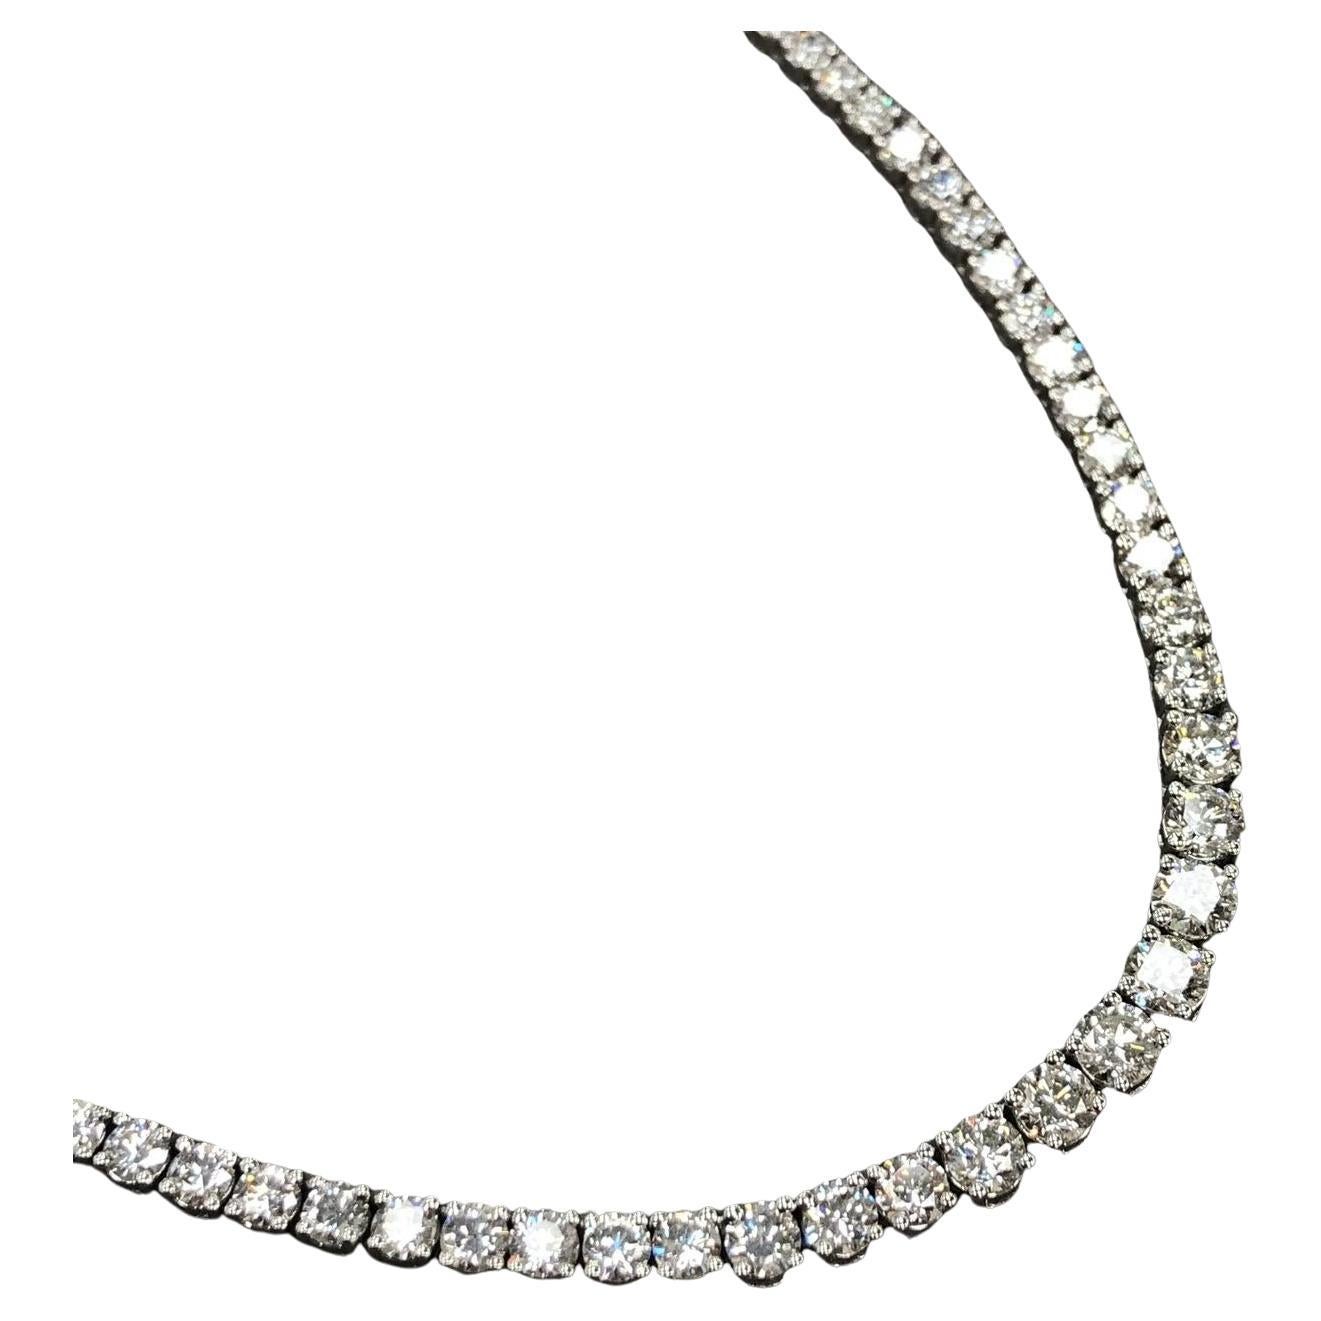 28 Carat Round Brilliant Cut Diamond Tennis Necklace Set in 18 Carat White Gold